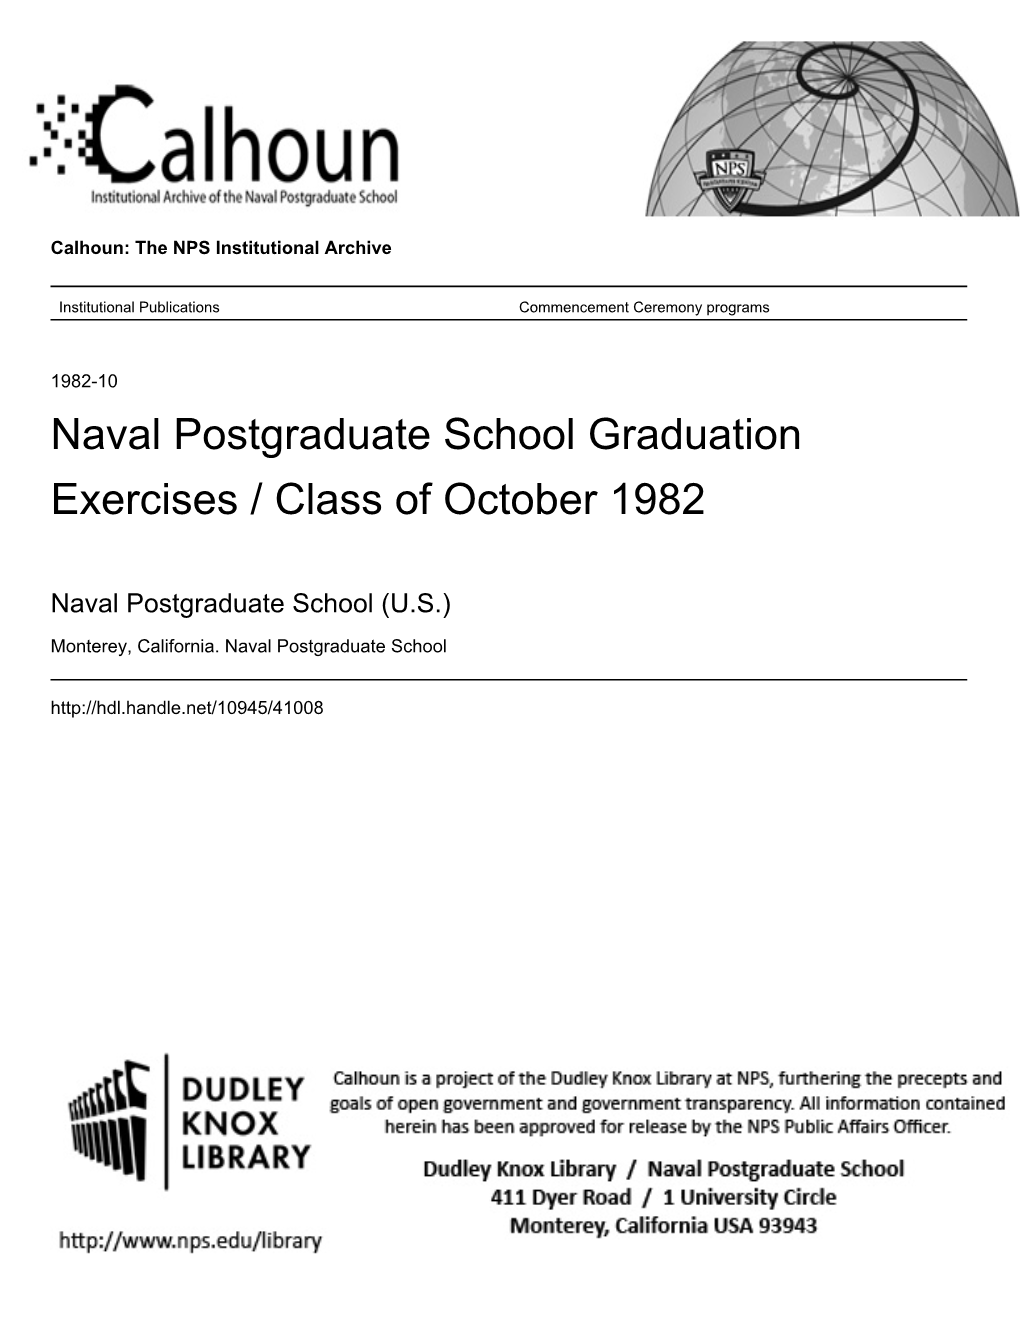 Naval Postgraduate School Graduation Exercises / Class of October 1982